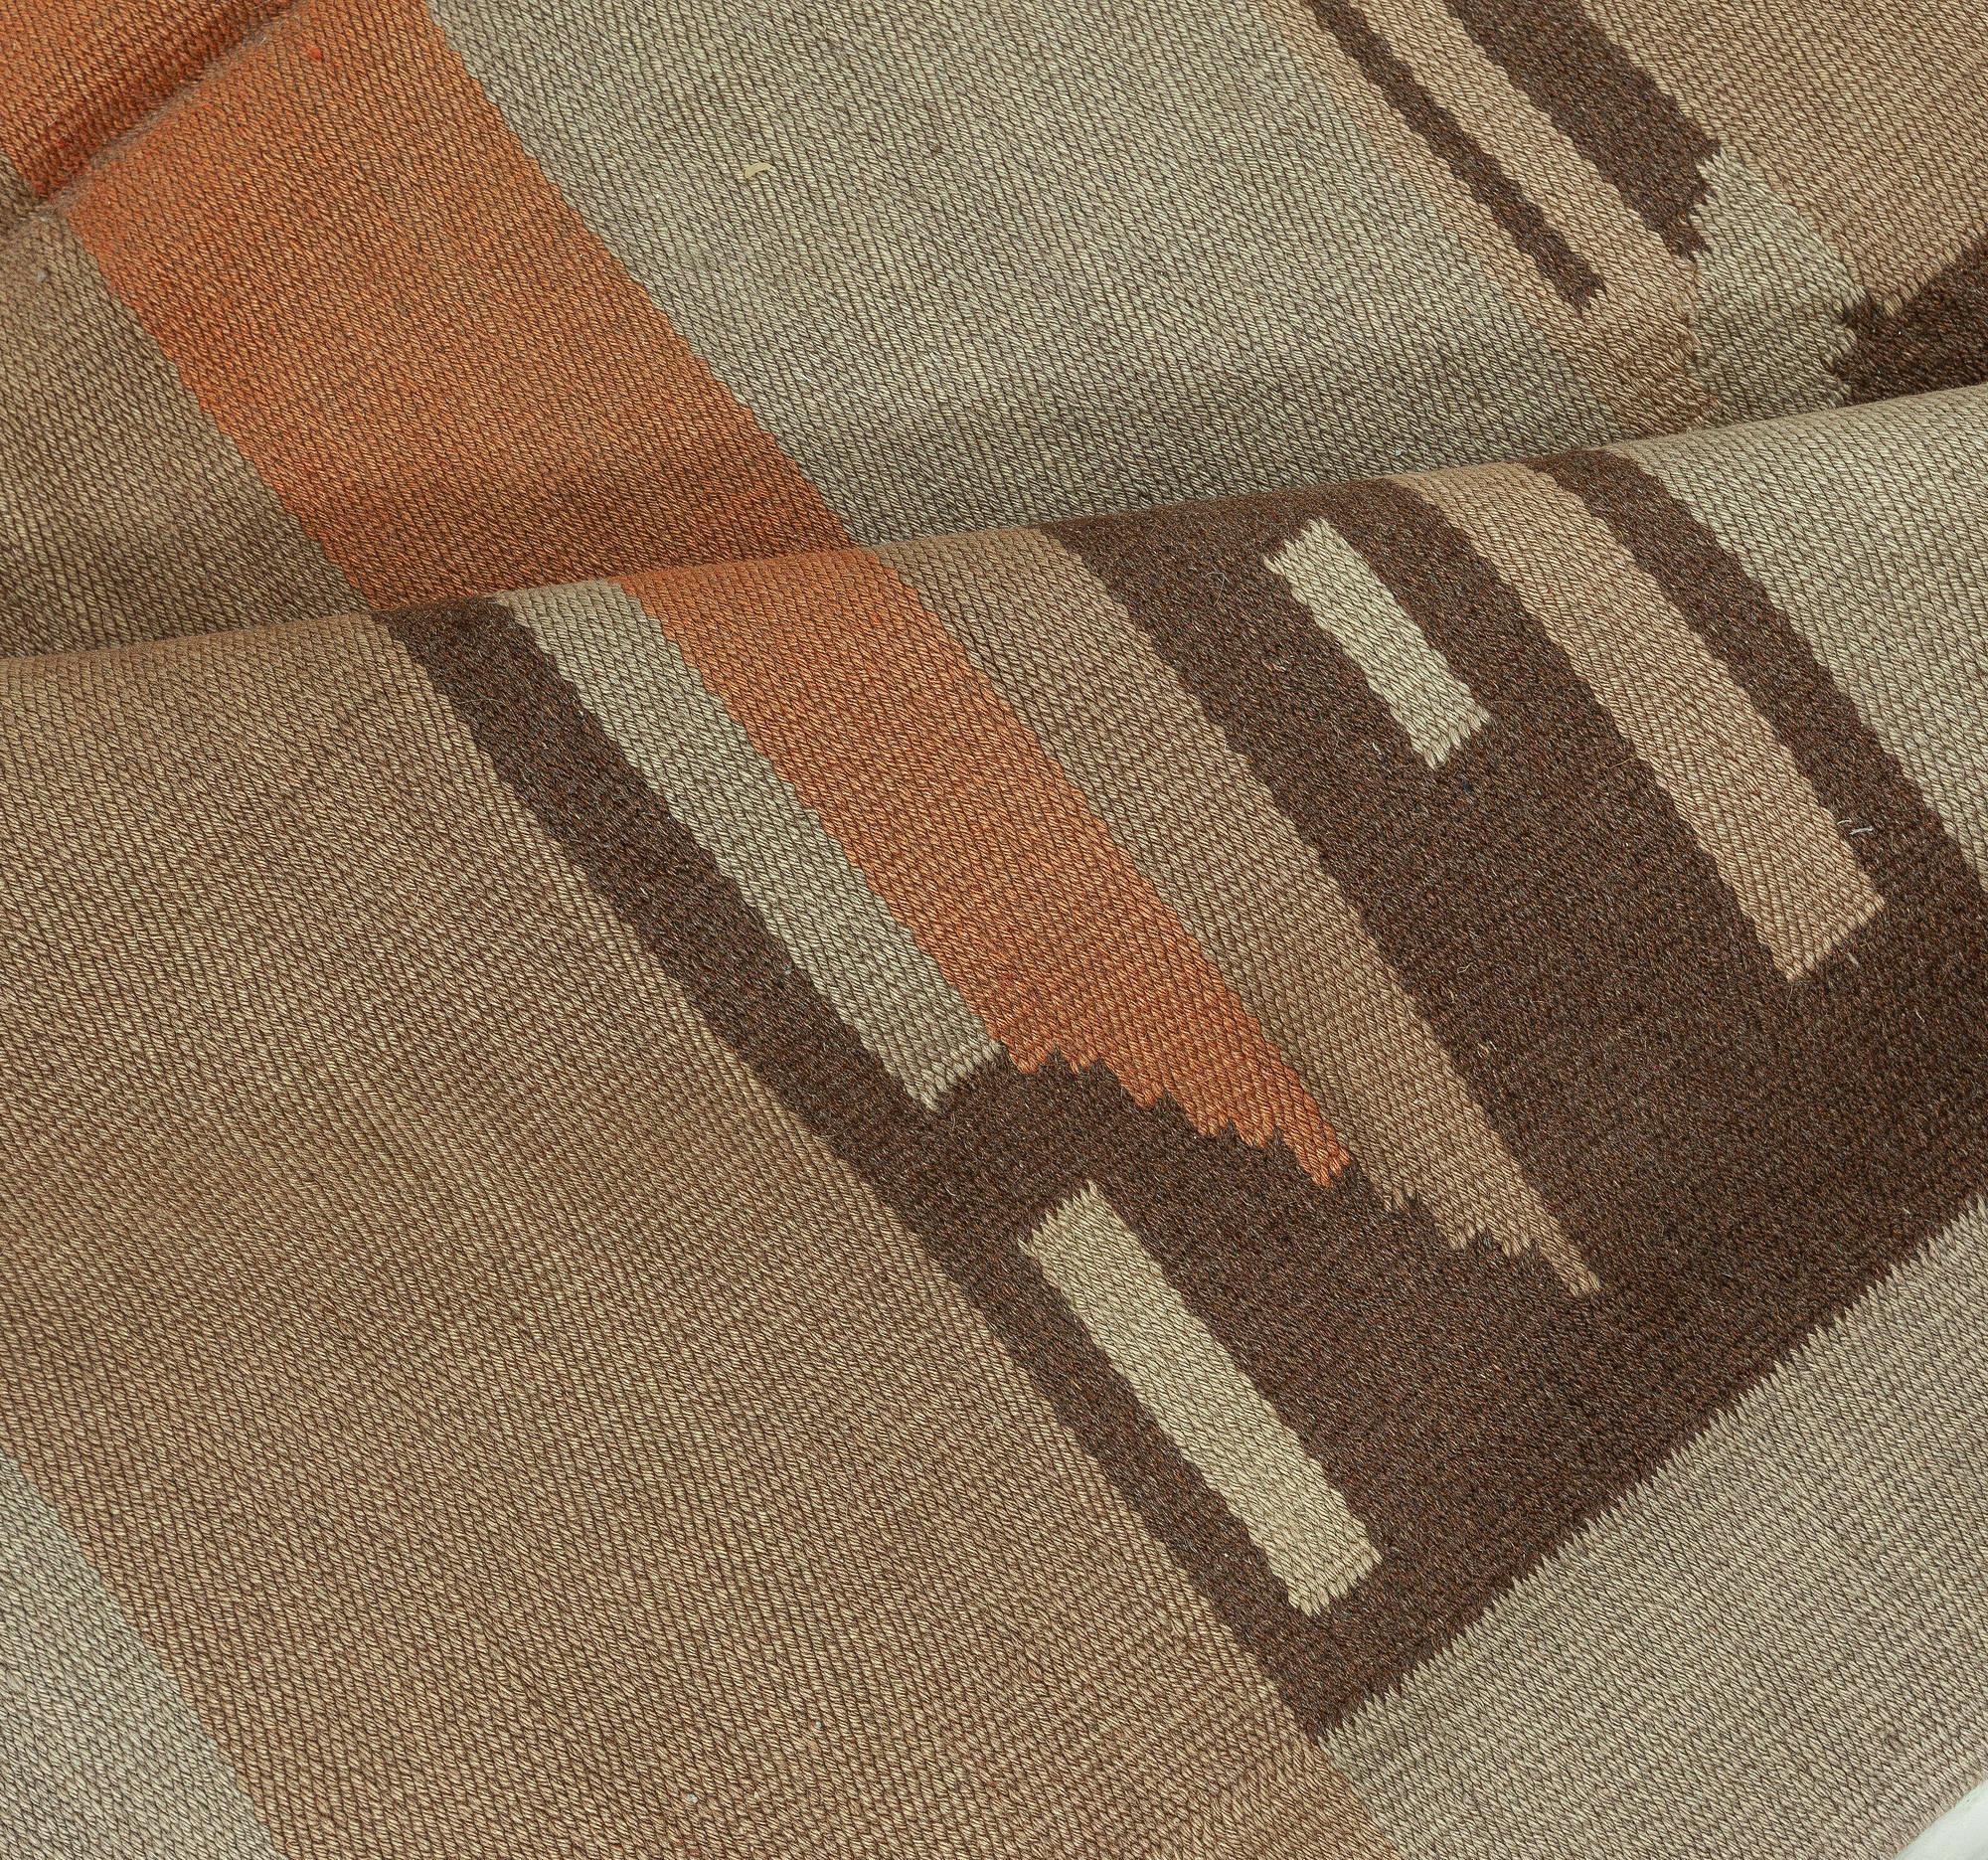 Mid-20th century Scandinavian Geometric Camel Peach Sand Beige Handmade Wool Rug
Size: 6'5